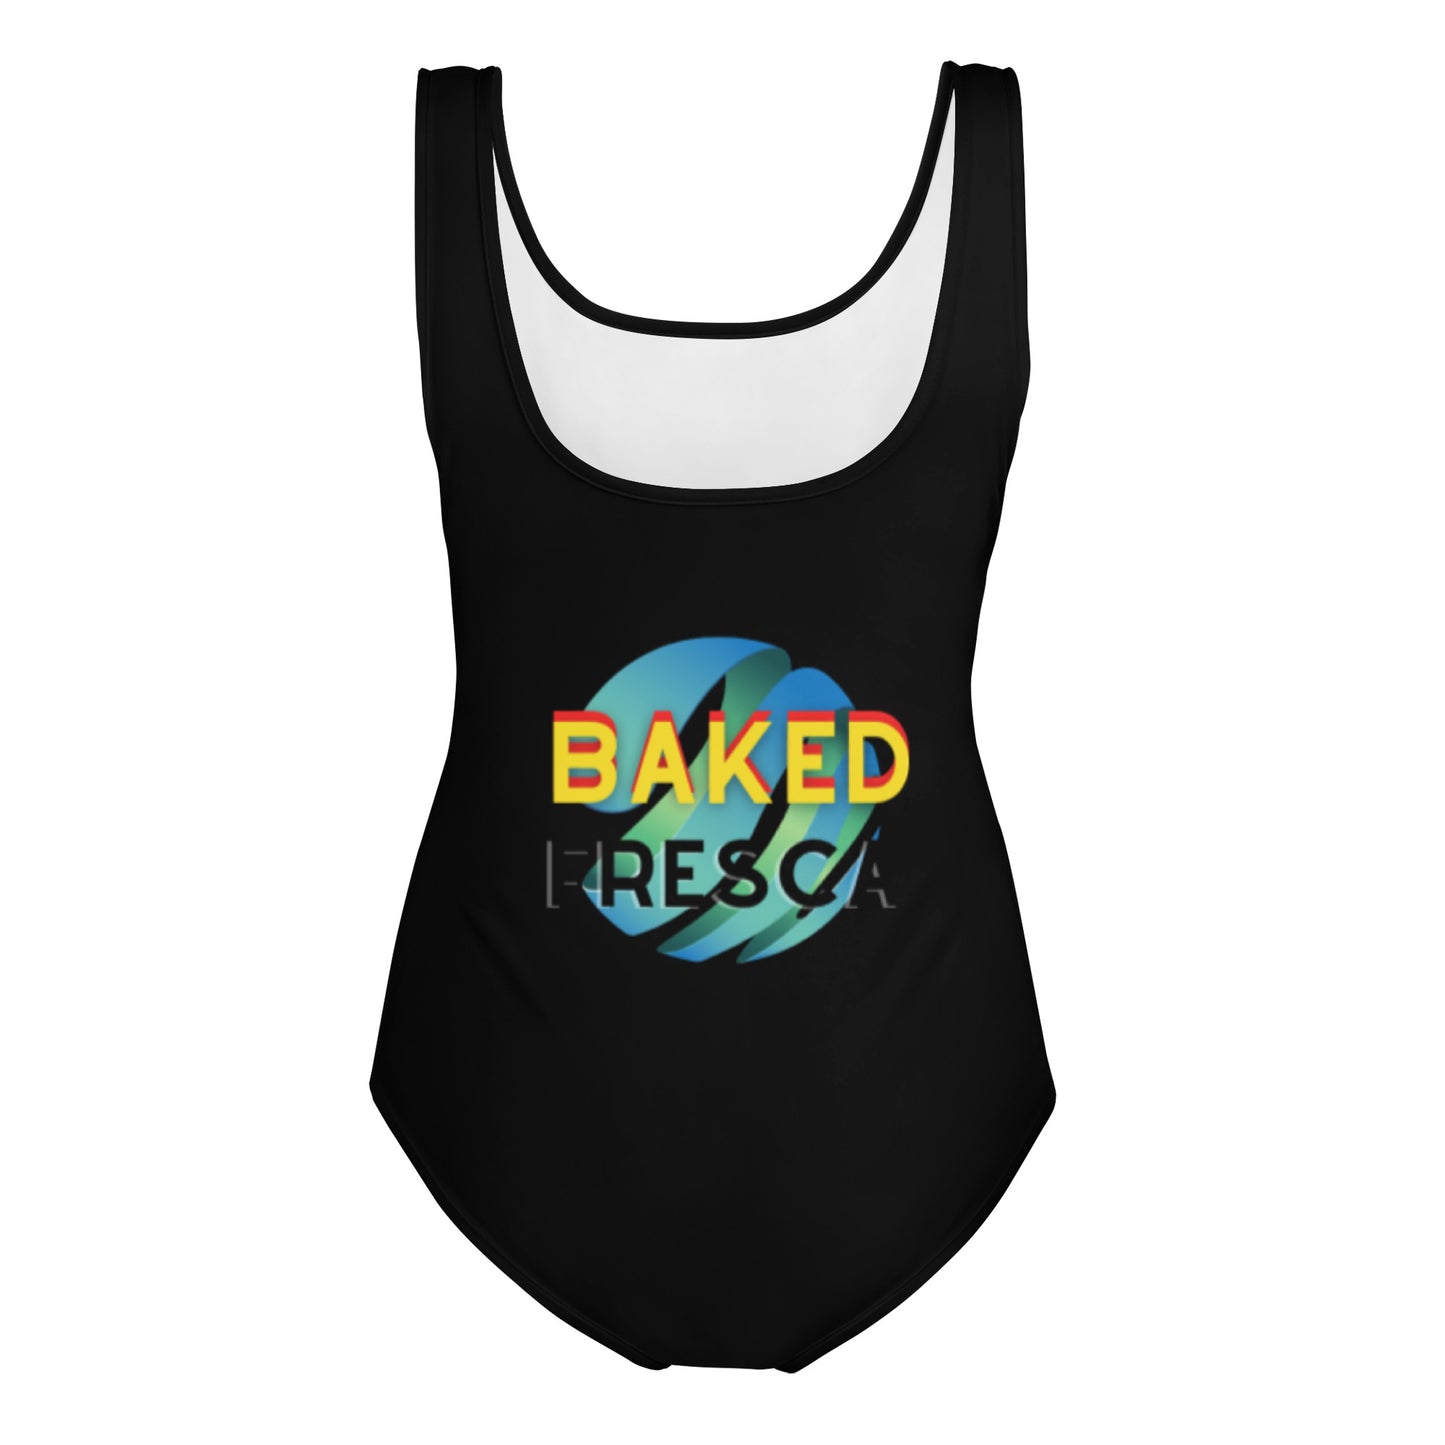 Basic Black Youth Swimsuit by Baked Fresca